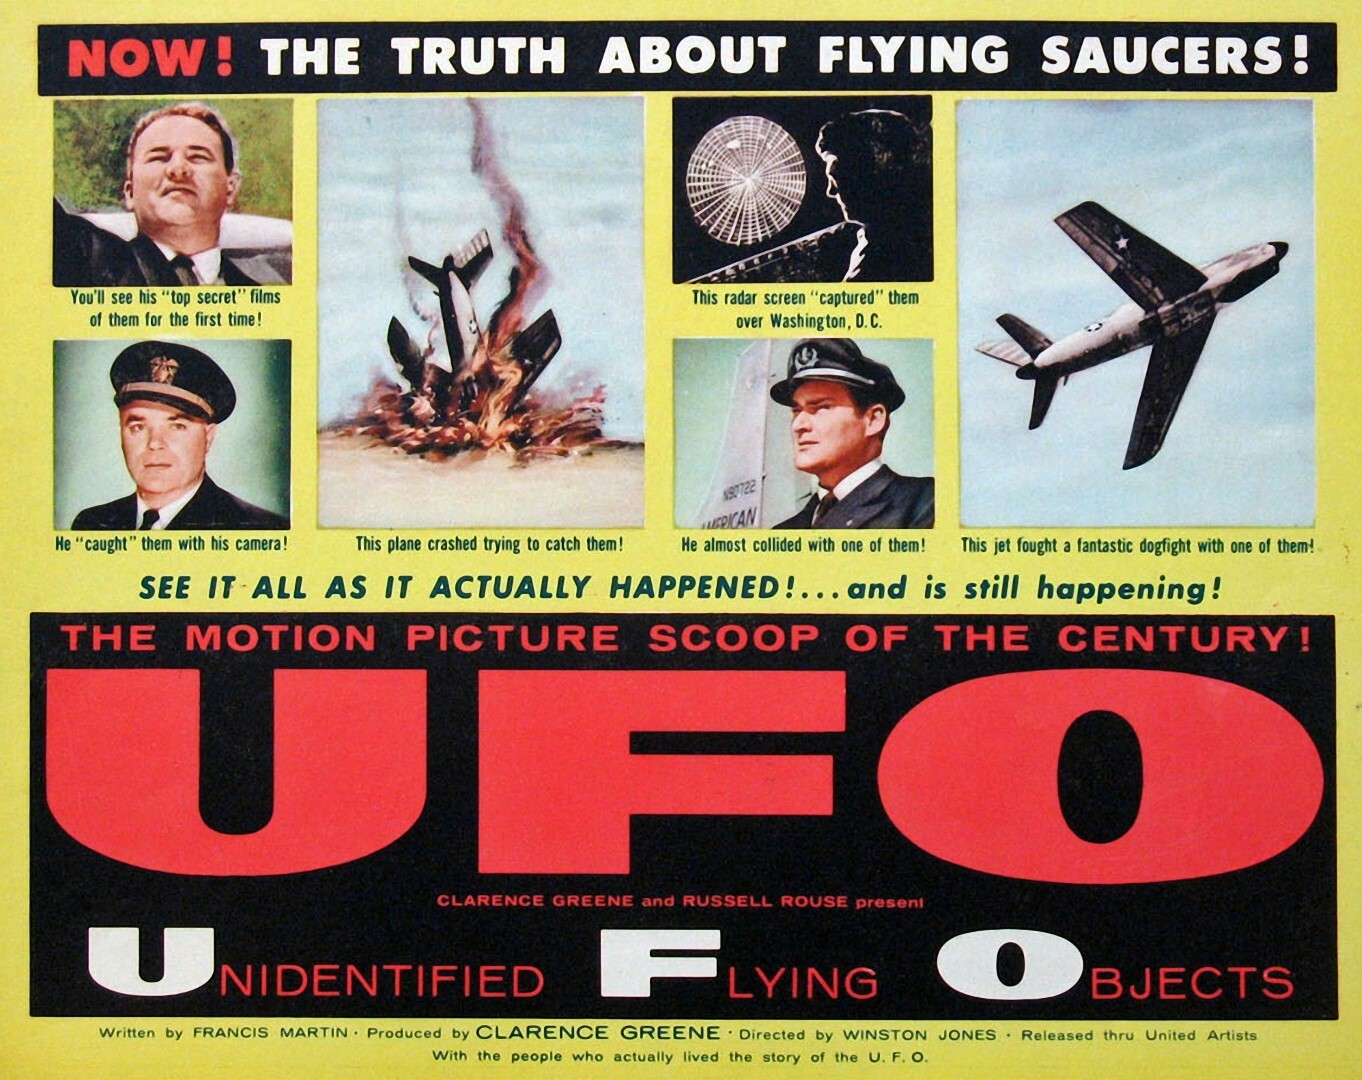 10-21004-united-artist-film-1956-res-300-large